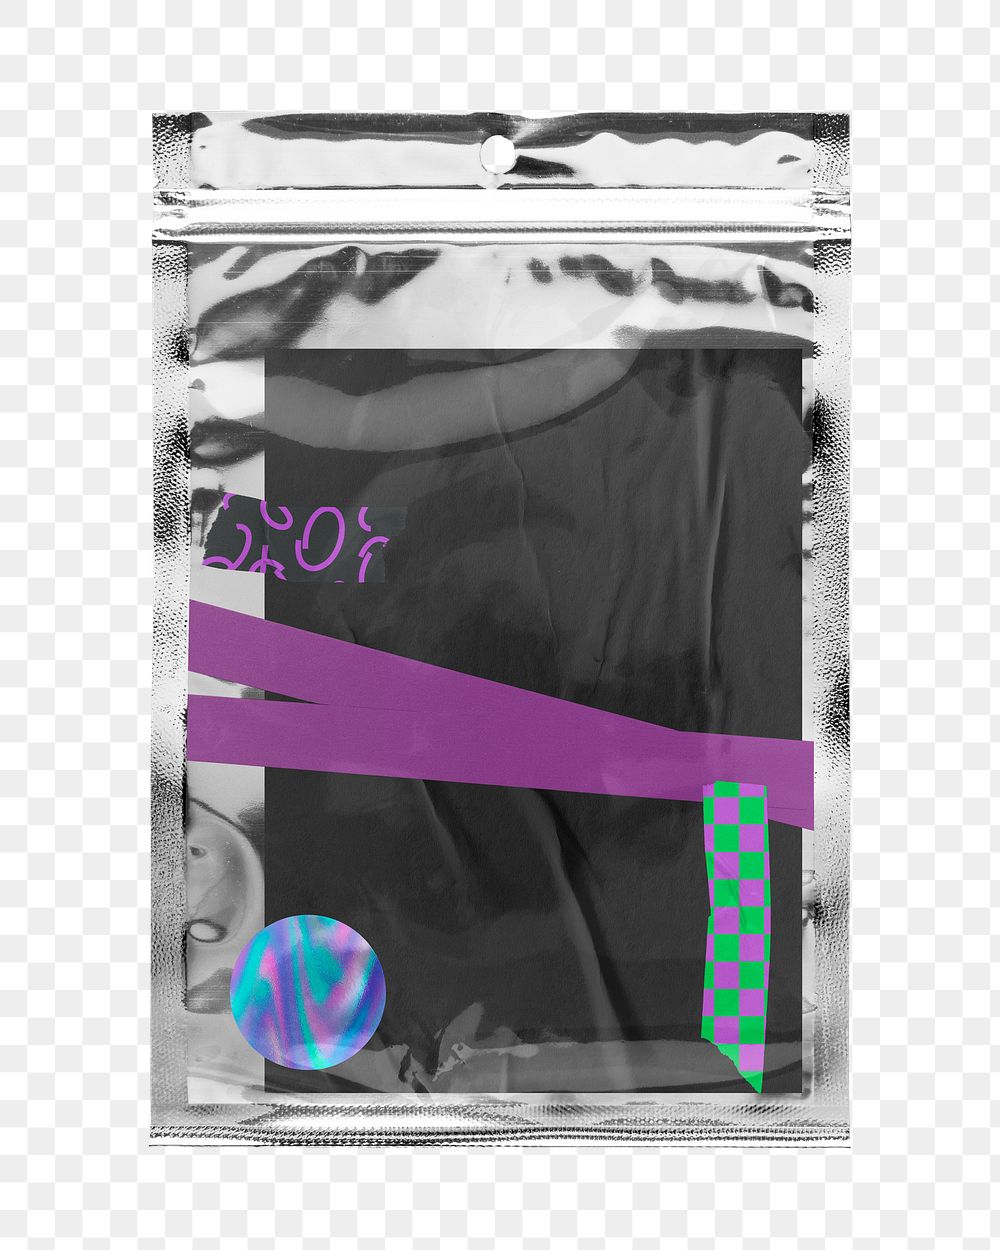 Product packaging bag png sticker, transparent background